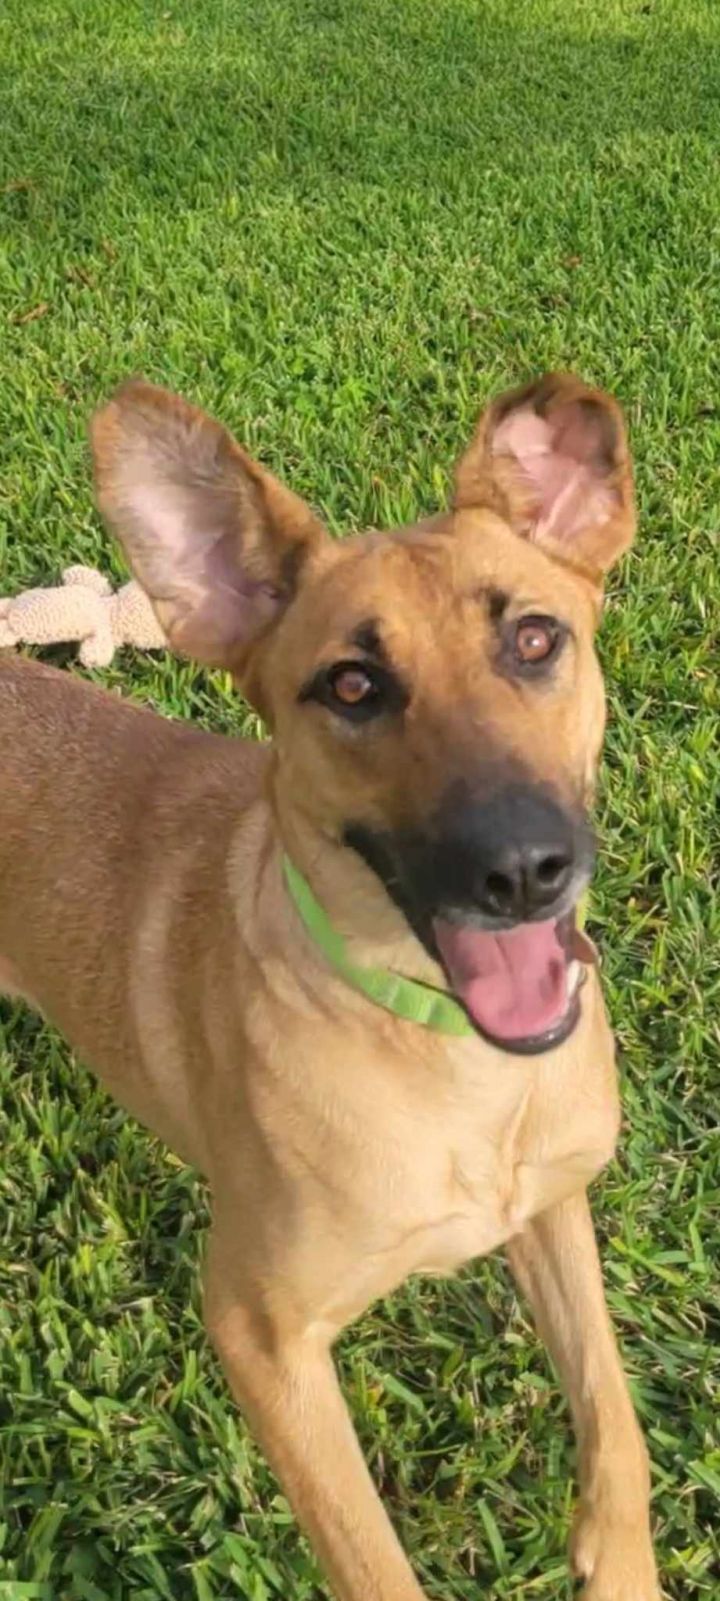 Mercy - A Fun Dog, an adoptable Shepherd Mix in Palm Harbor, FL_image-1